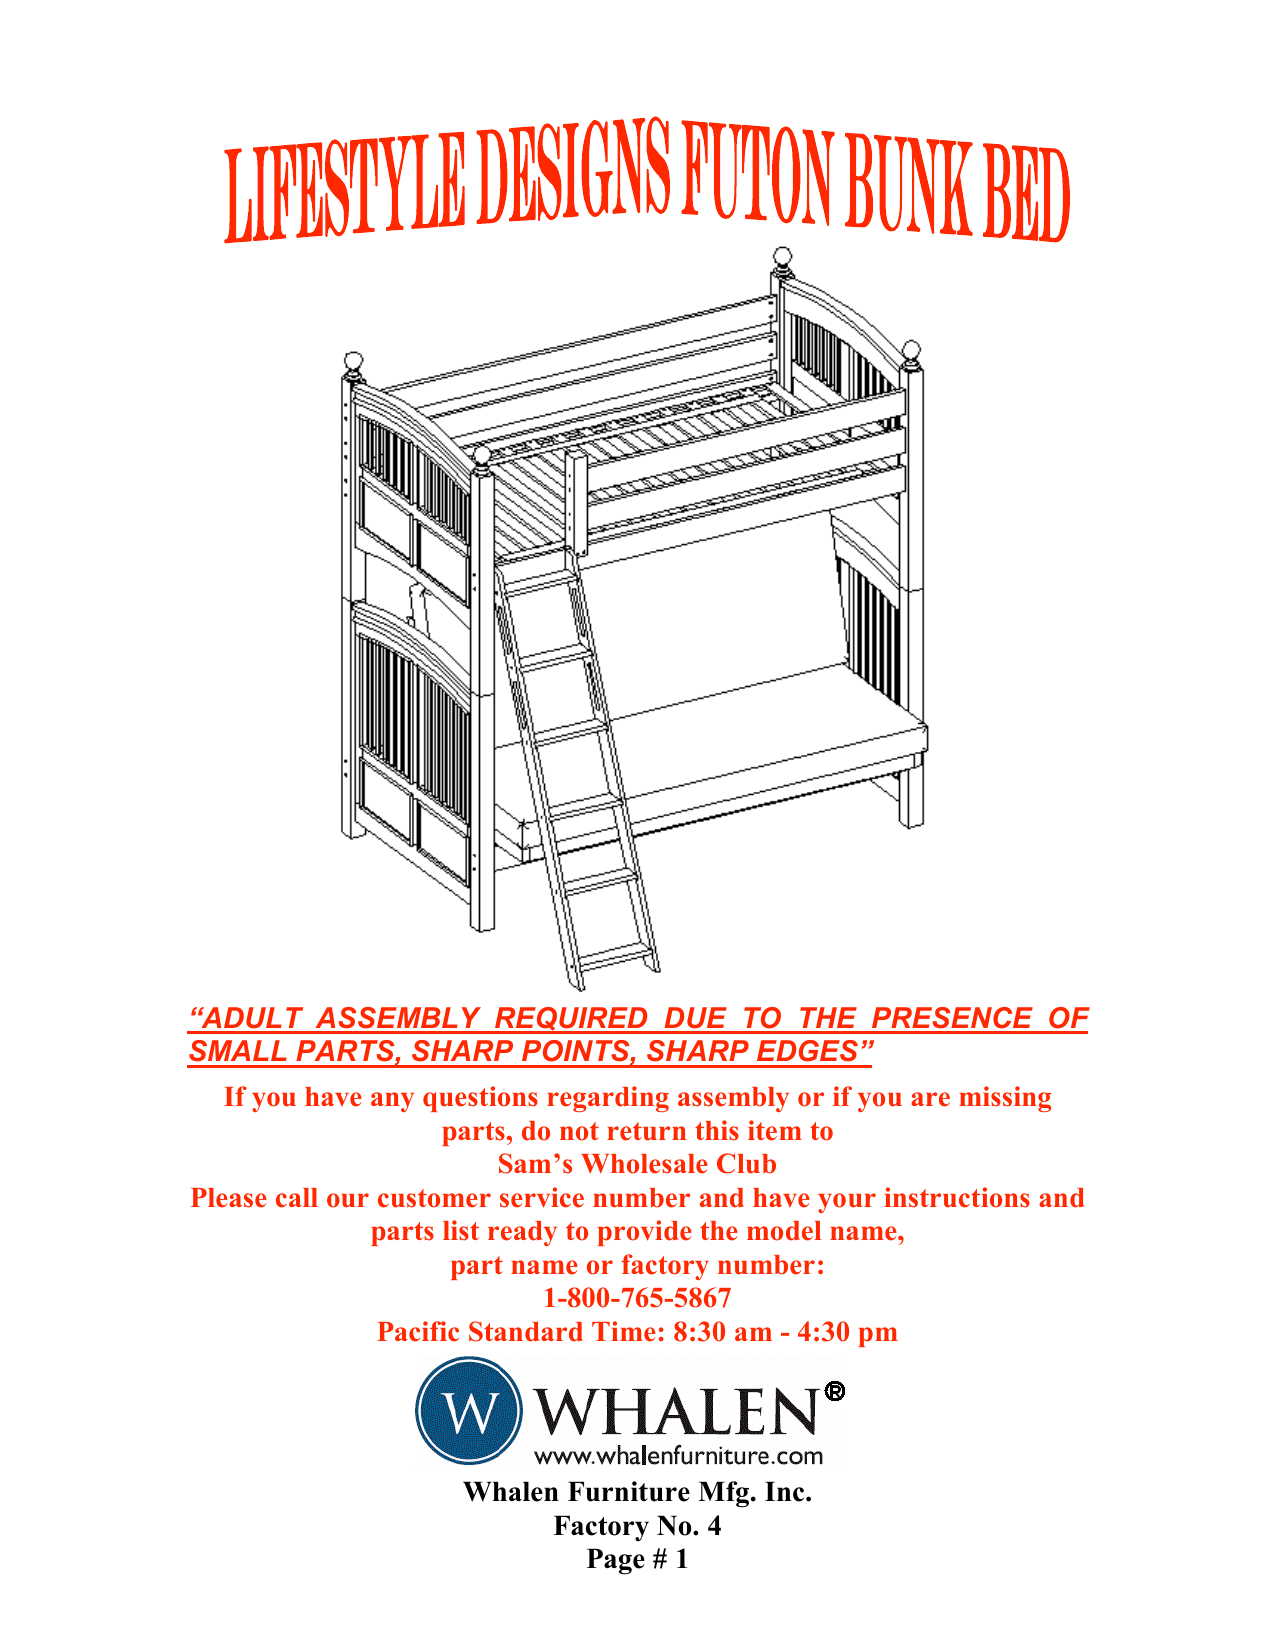 Whalen Furniture Mfg Inc Factory No, Futon Bunk Bed Instructions